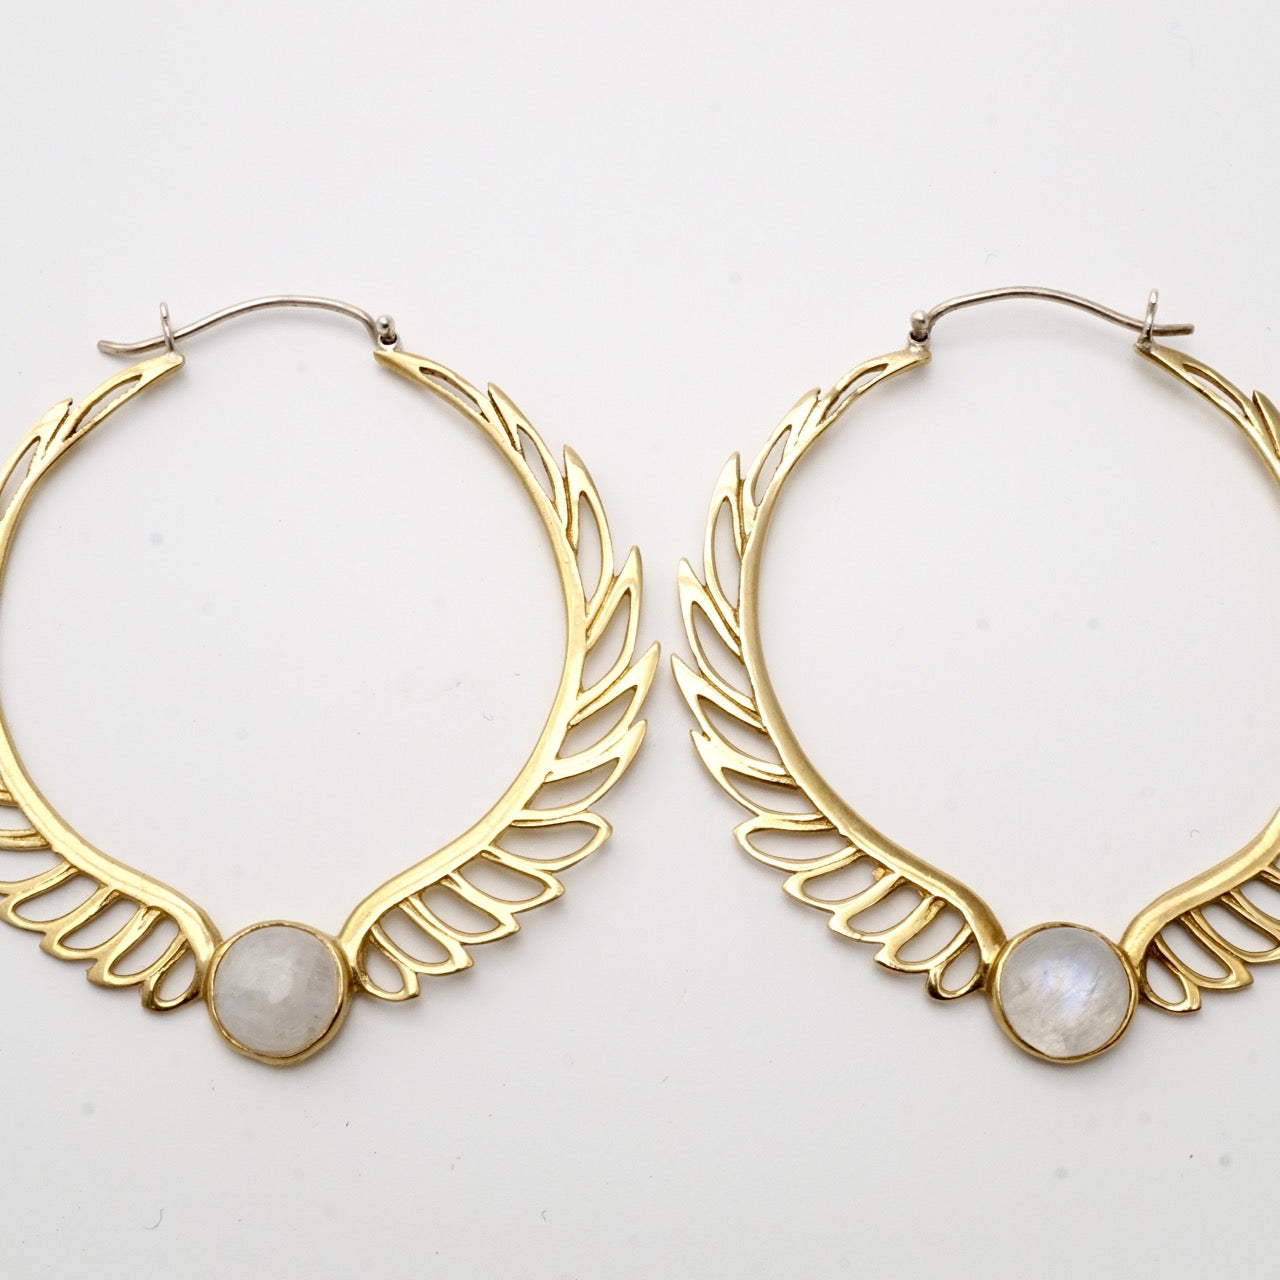 Feather Earrings - Rainbow Moonstone Earrings - Large Tribal Hoops Earrings - Moon Goddess Earrings - Wing Earrings (170B)